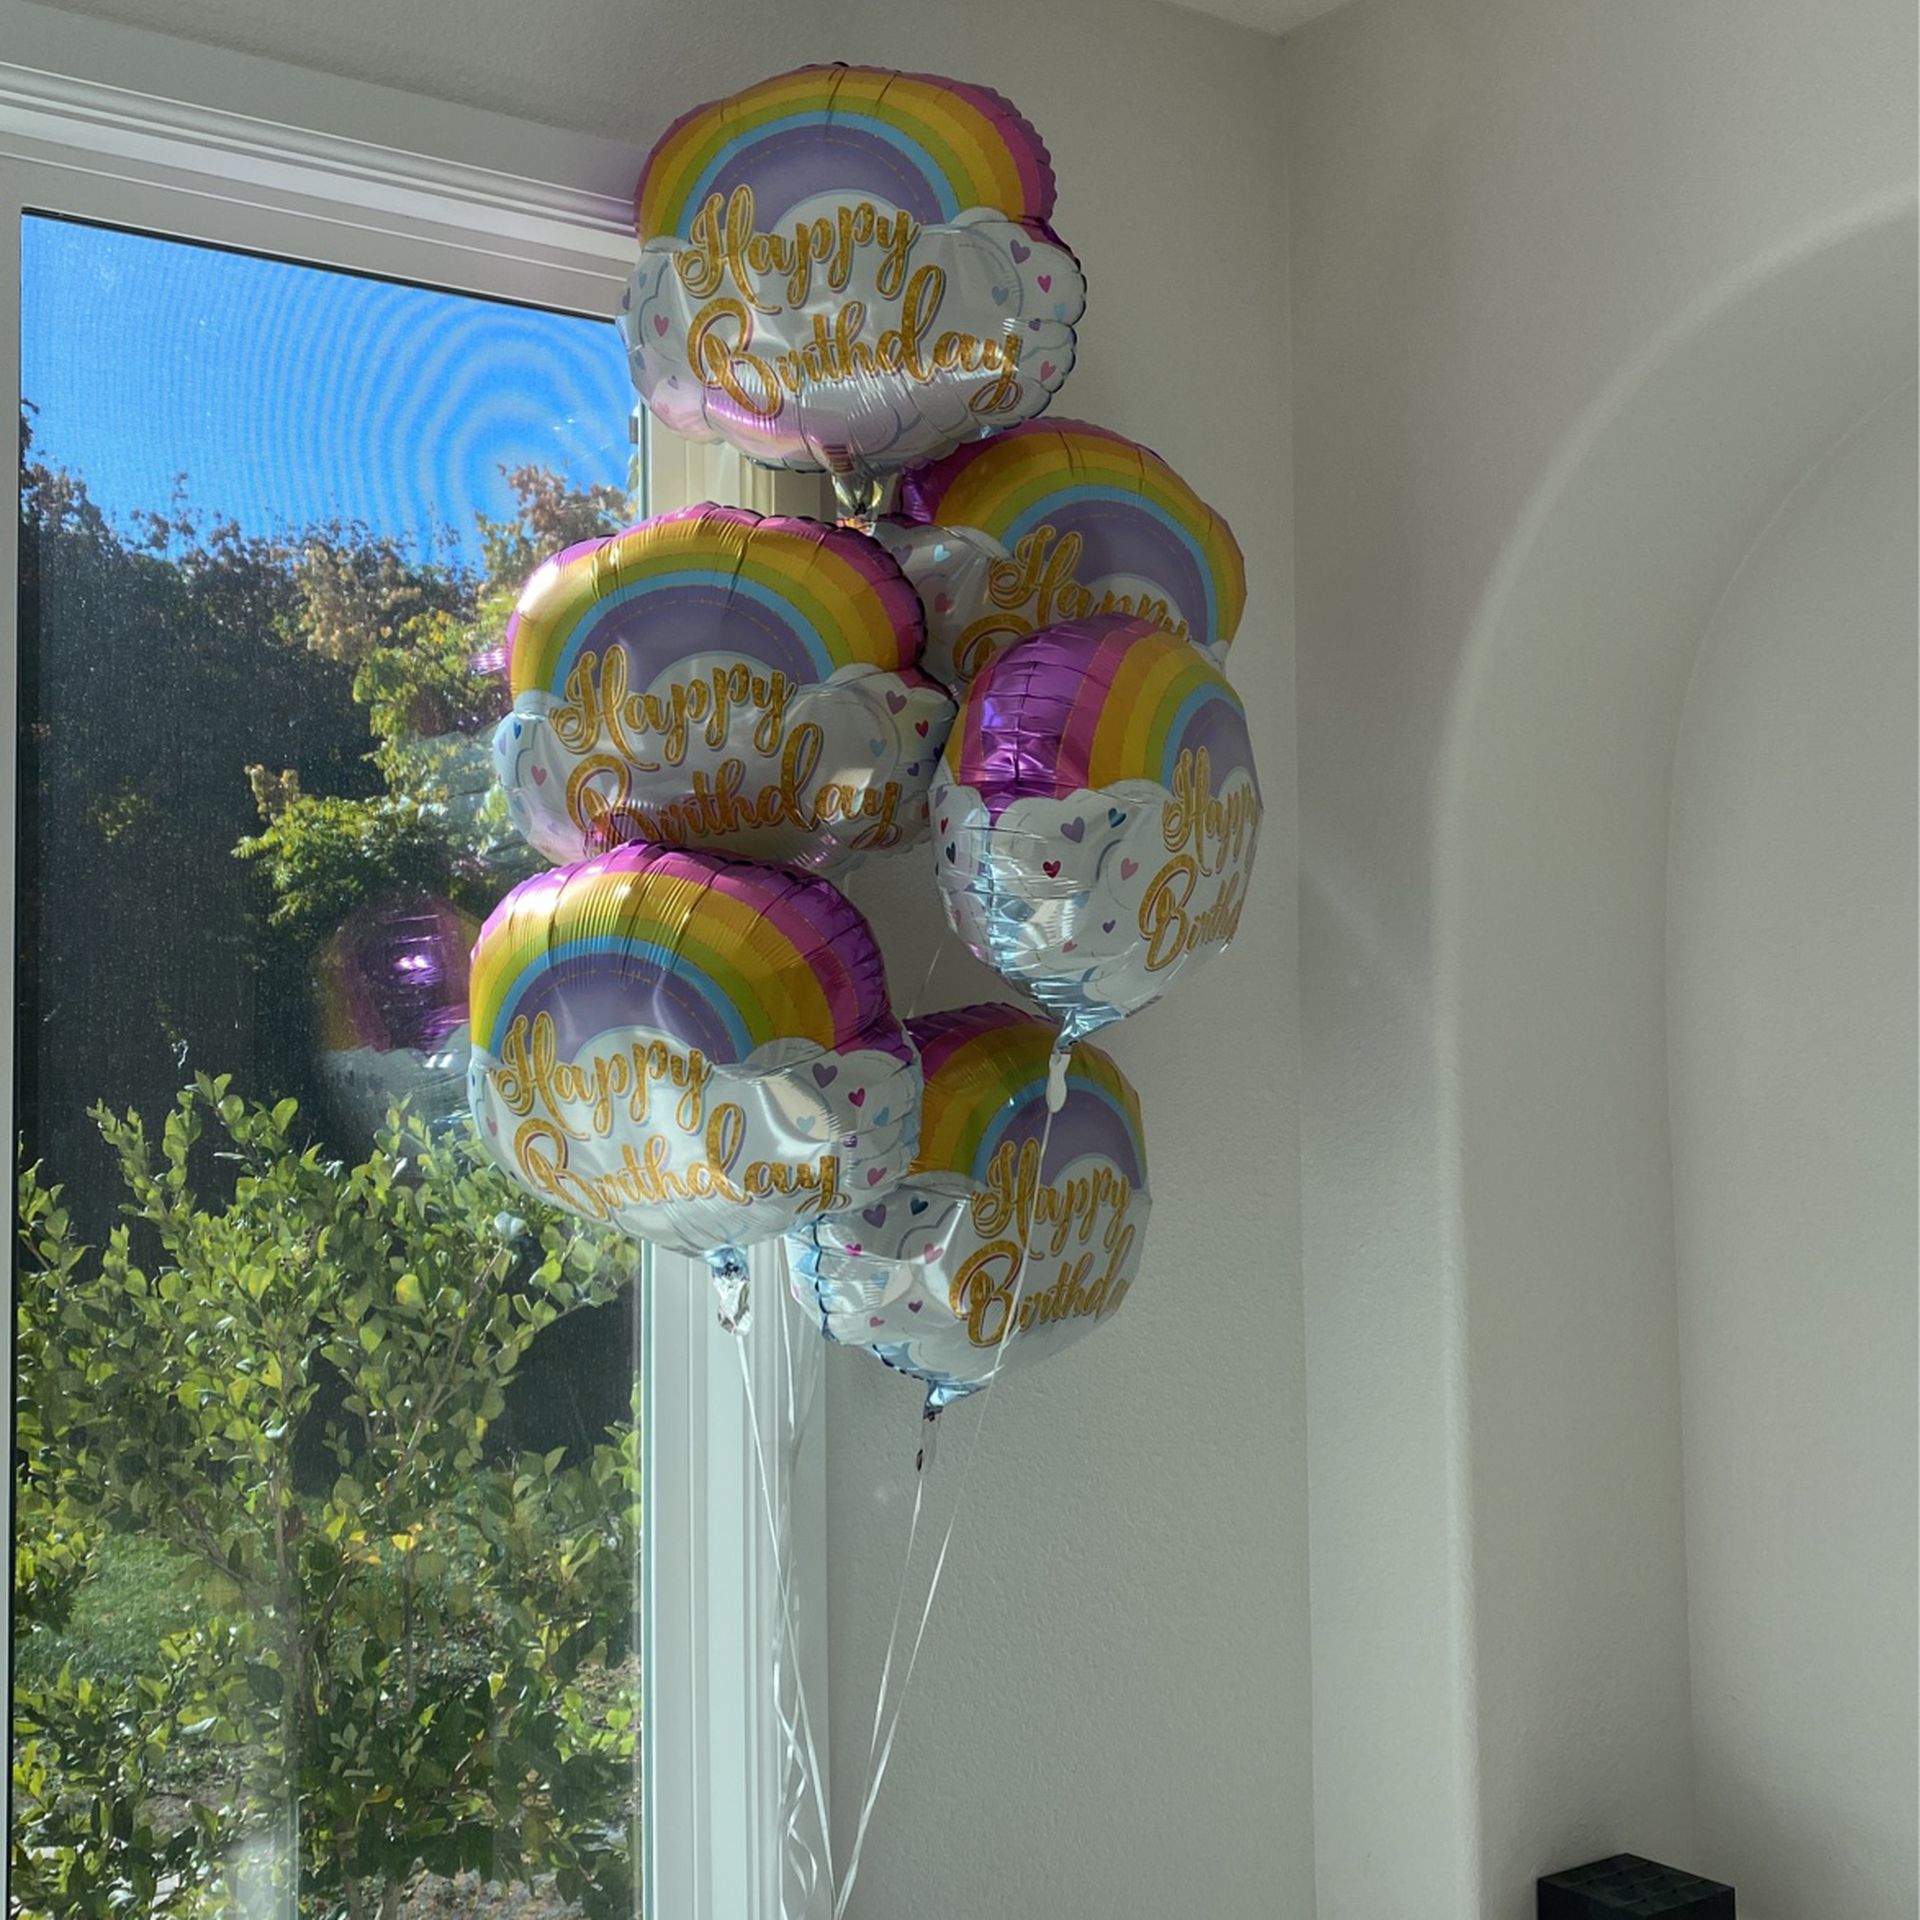 Free Balloons - Happy Birthday 6 Total